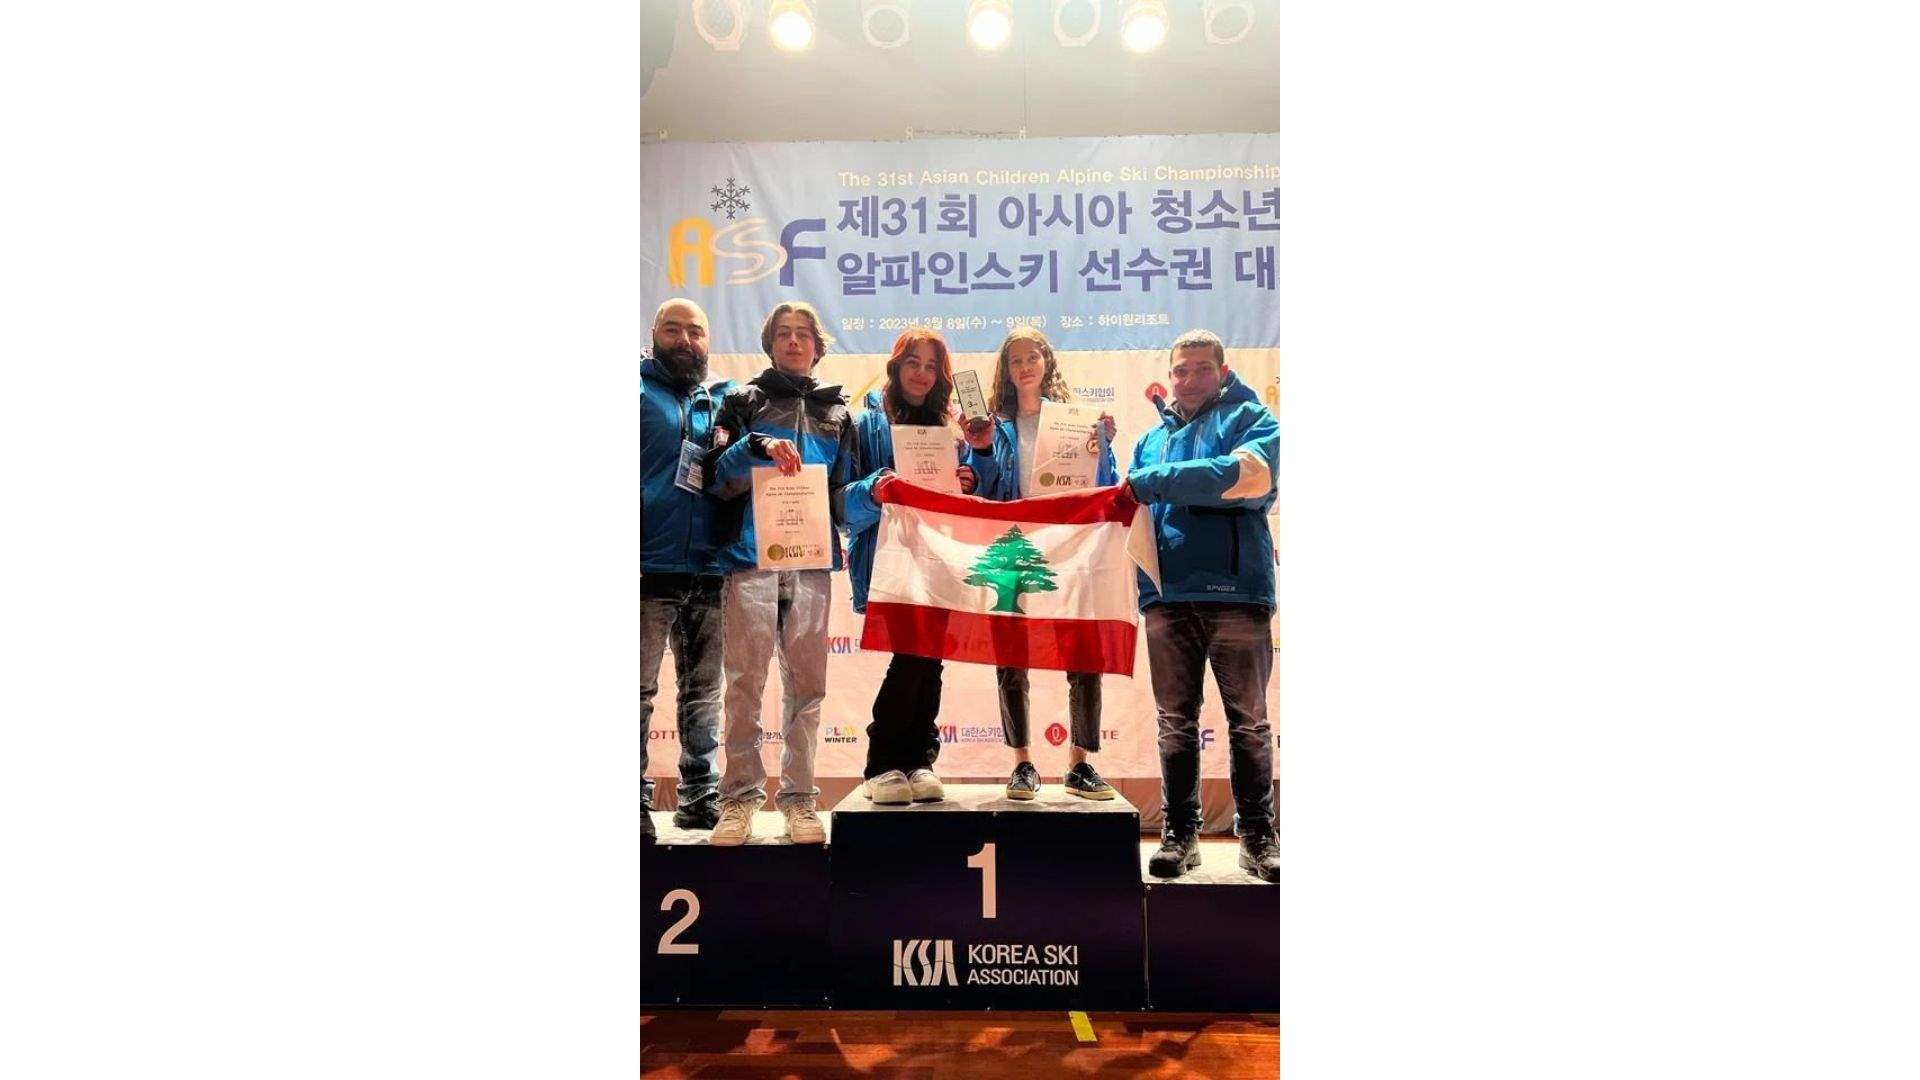 Lebanon achieves third place at Asian Children Alpine Ski Championship   